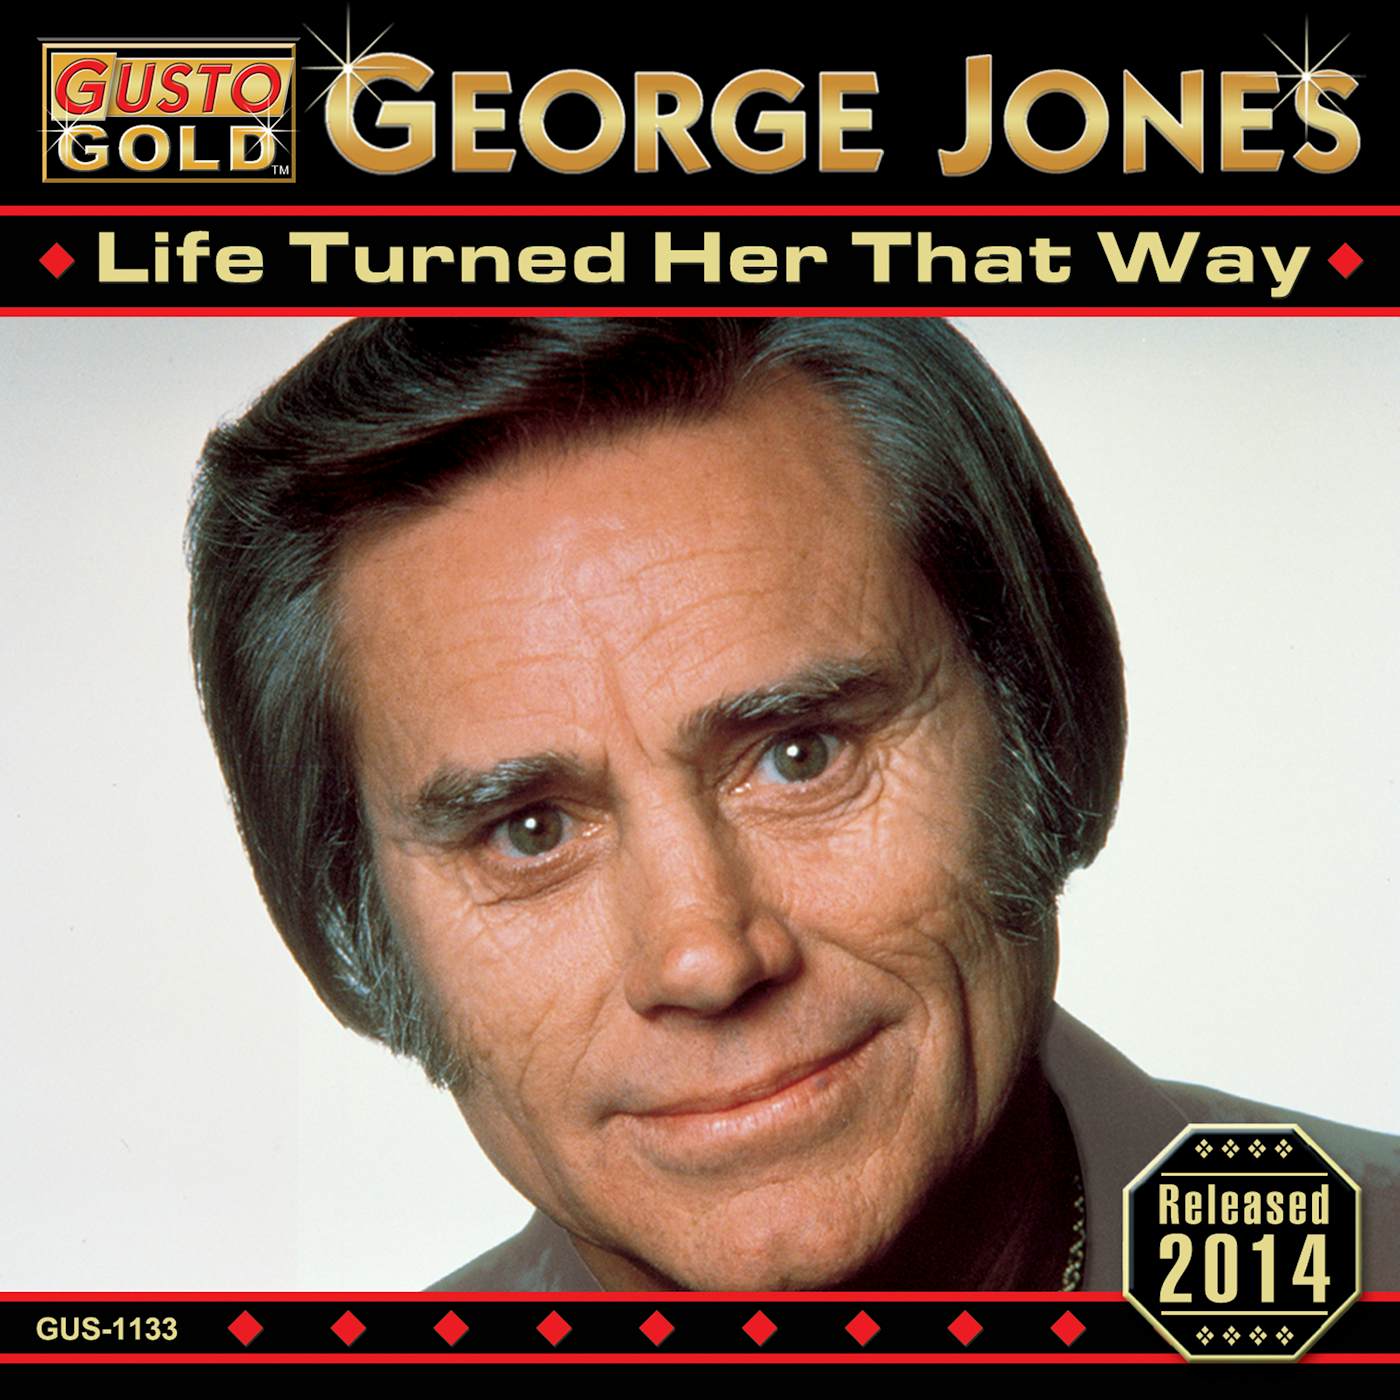 George Jones LIFE TURNED HER THAT WAY CD